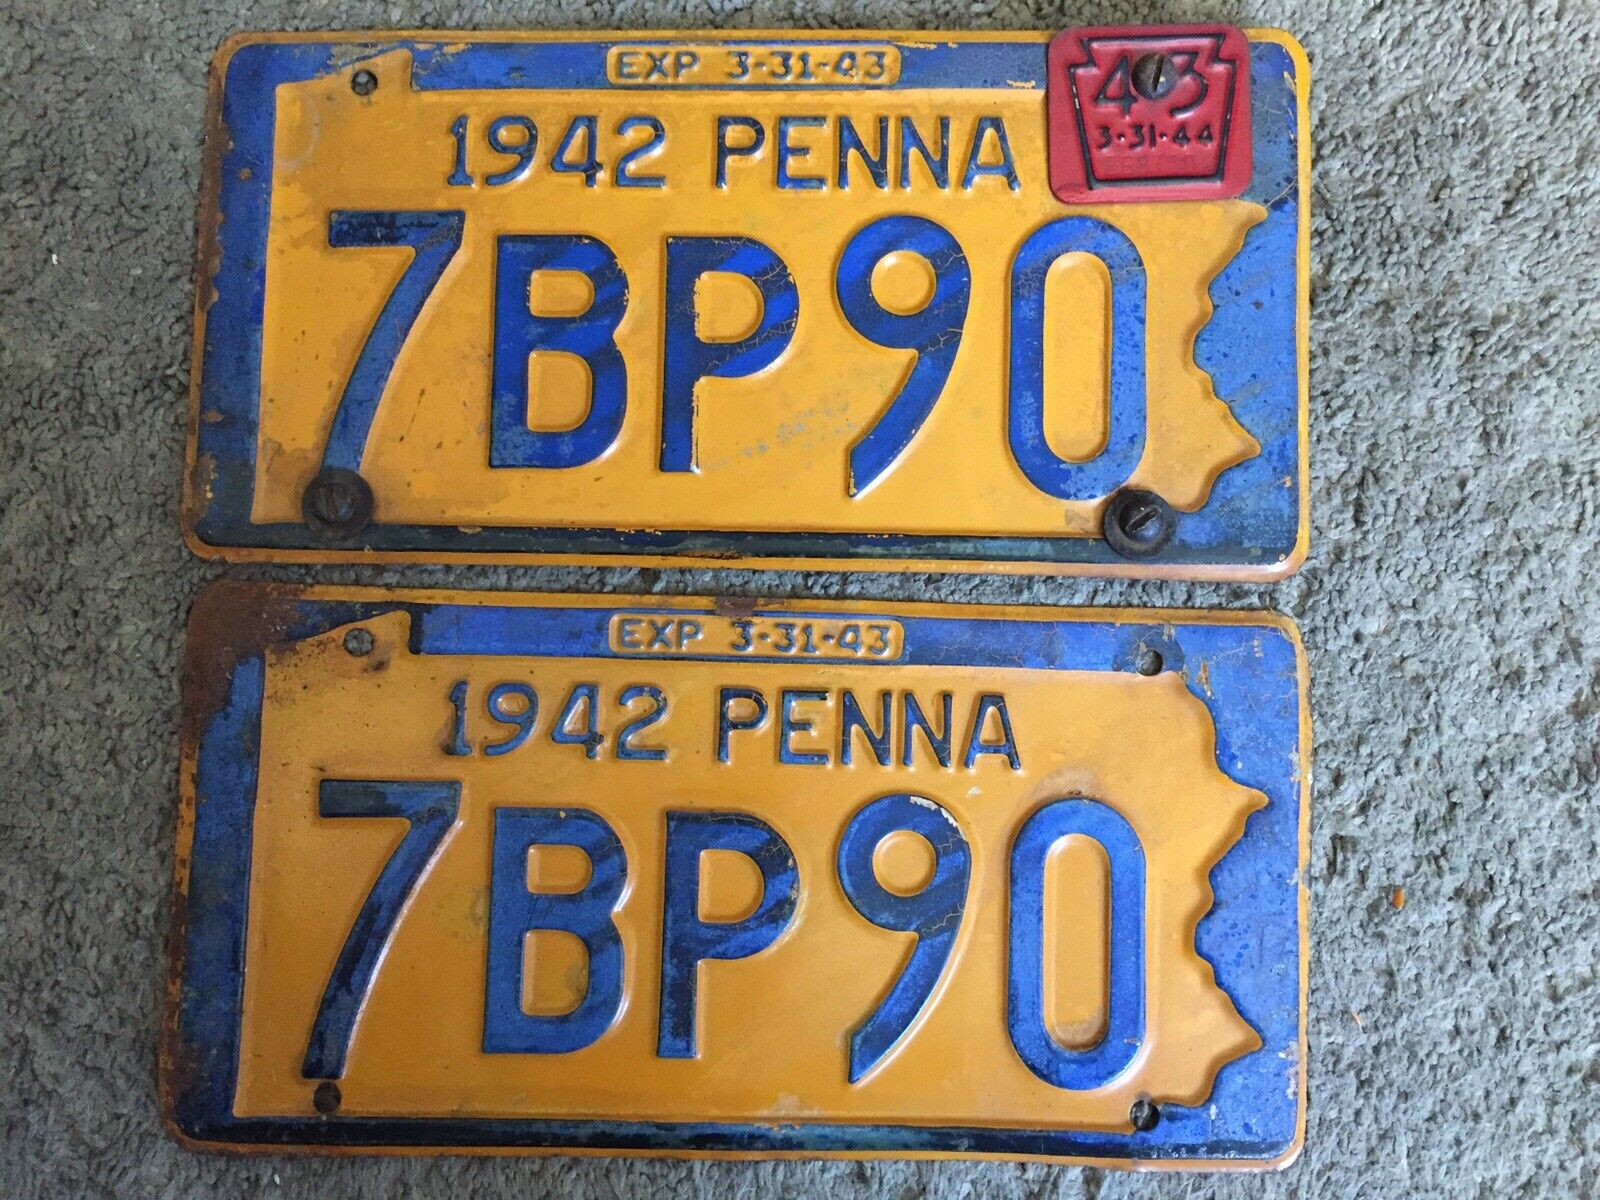 Vintage Pennsylvania Penna 1948 Expired License Plate Set - 7bp90